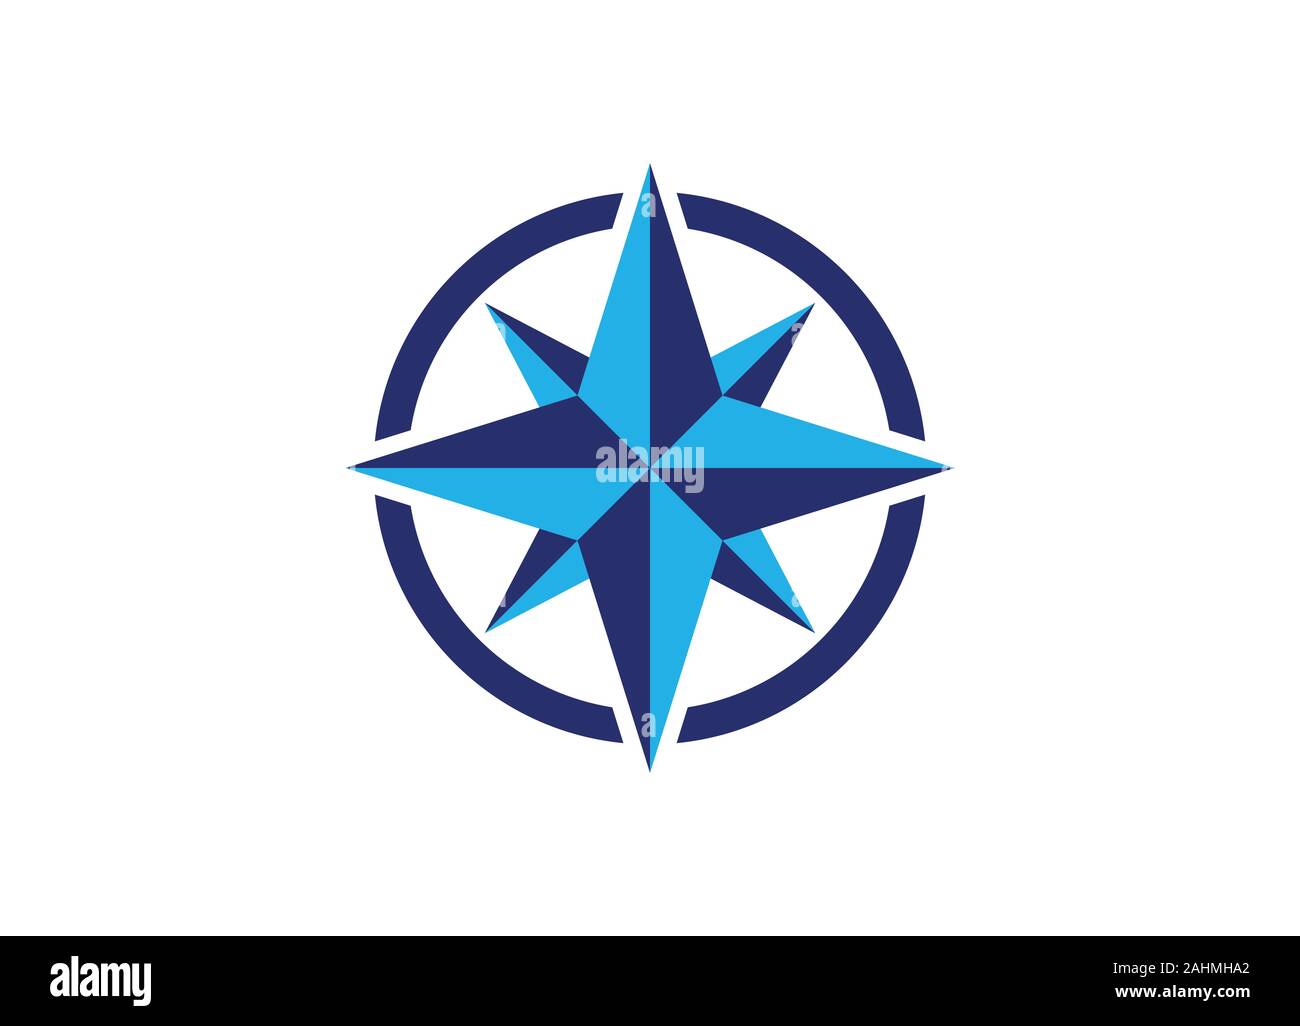 Kompass Logo Vektor Icon. Moderne Navigation Symbol. Lage Logo Design  vorlage, Kreative Kompass Konzept, Logo Stock-Vektorgrafik - Alamy